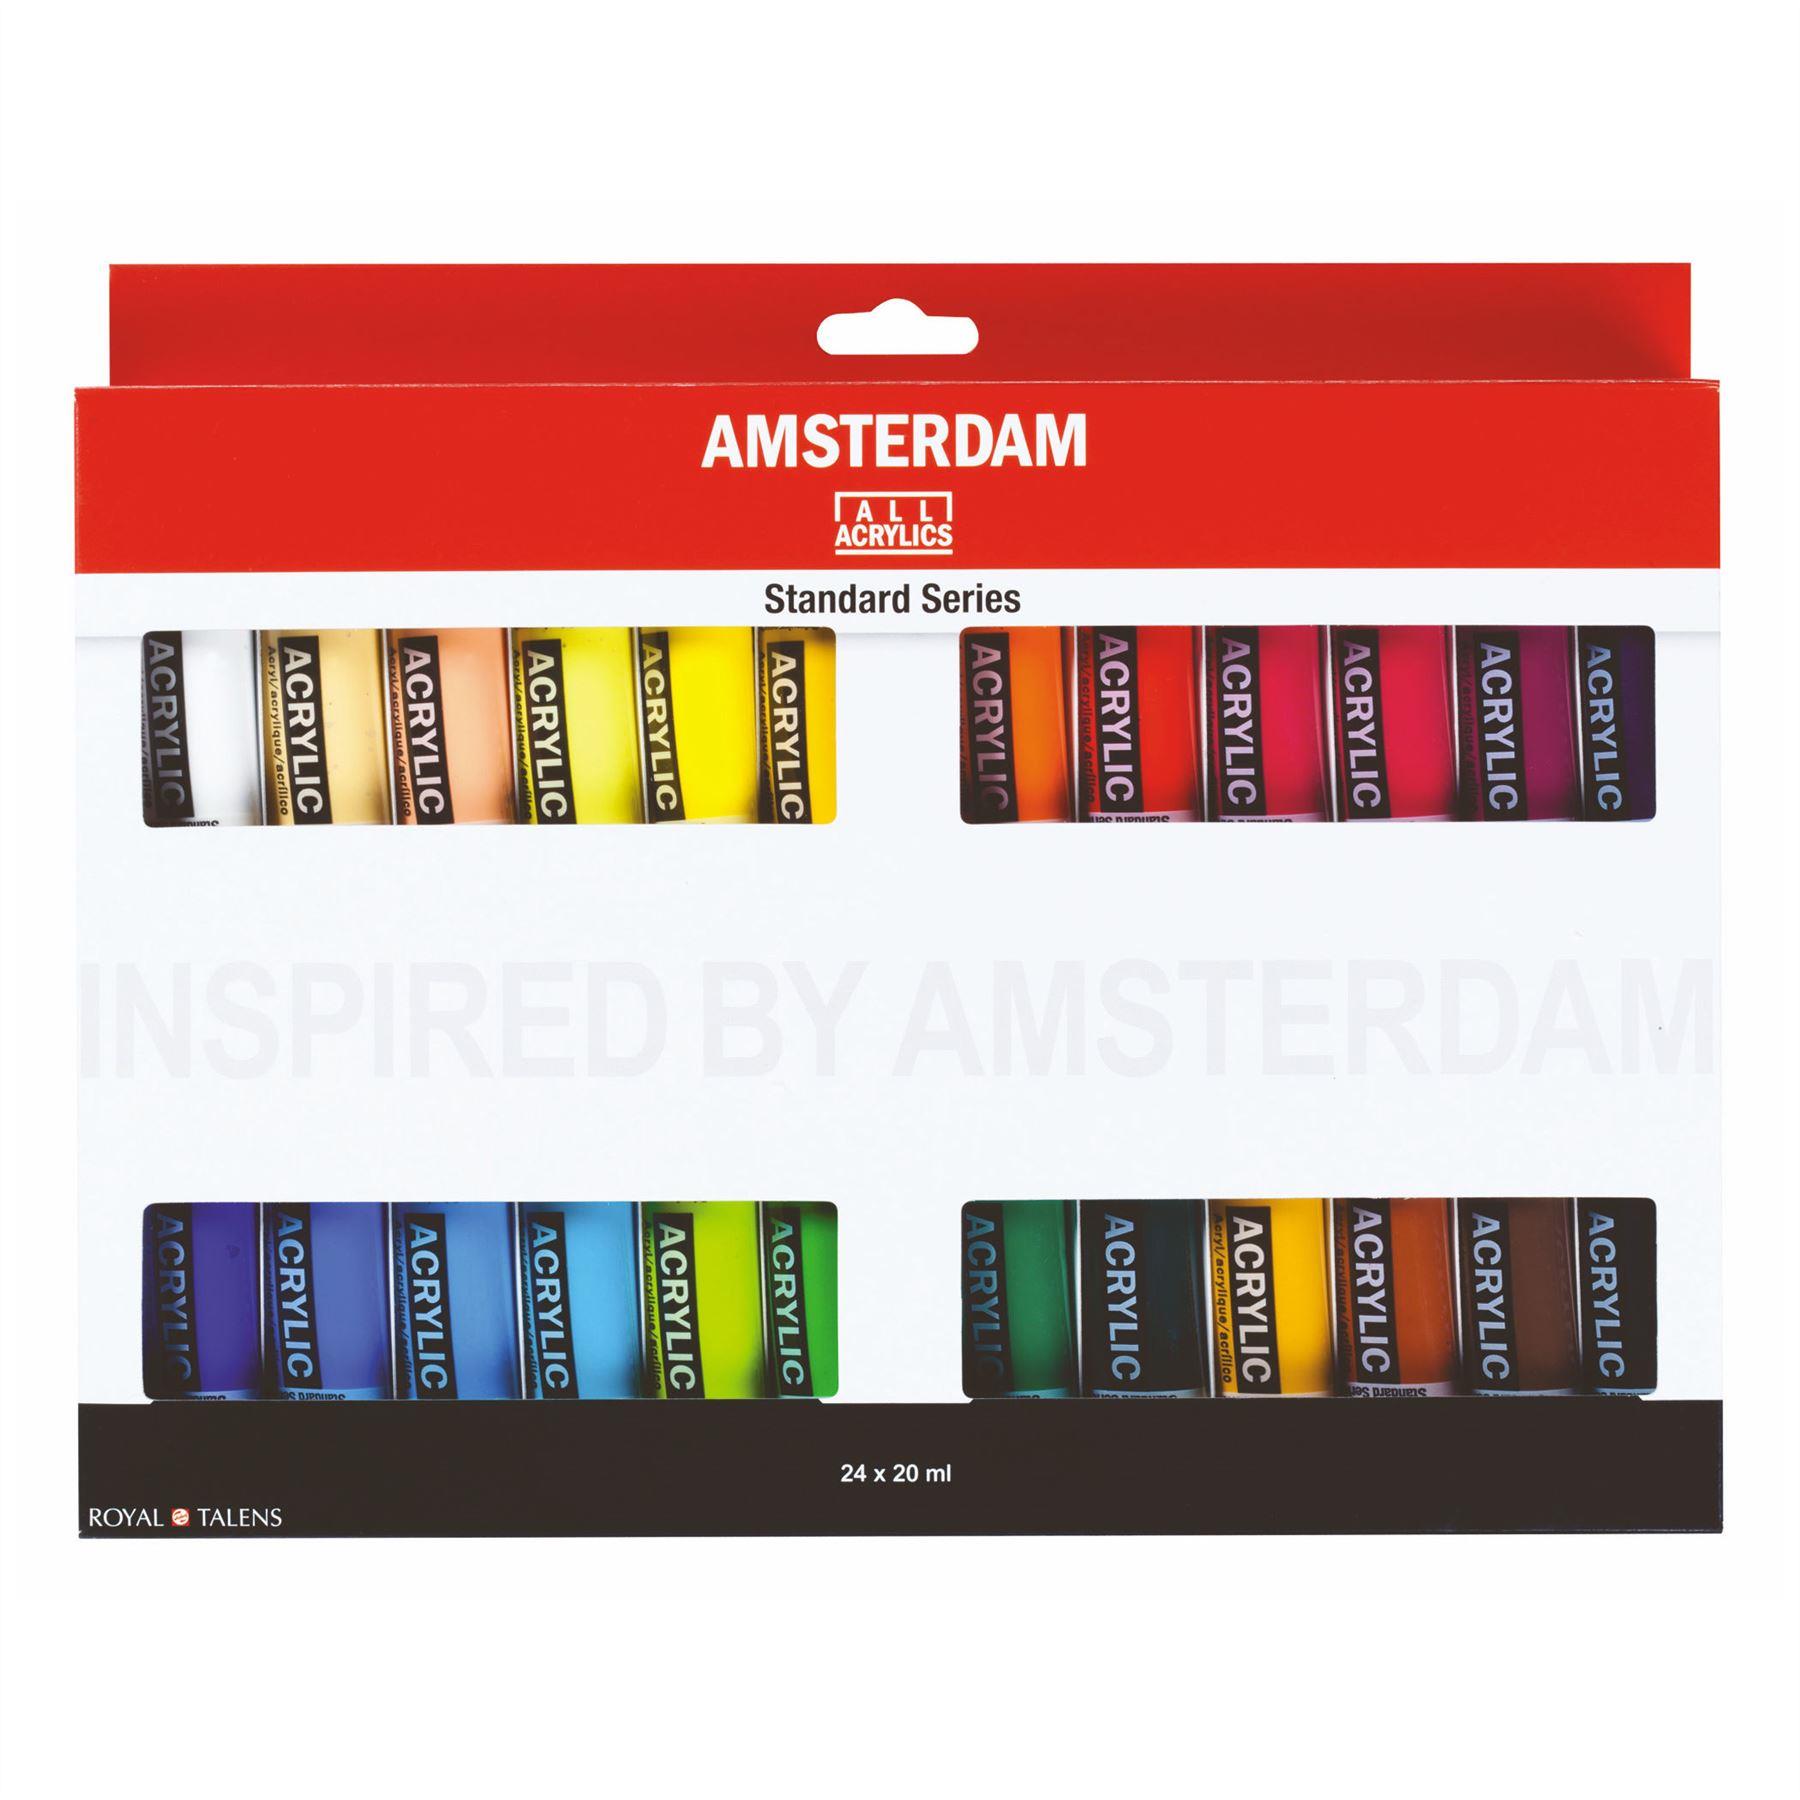 Royal tallens amsterdam acrylic colour paint set 24 x 20ml